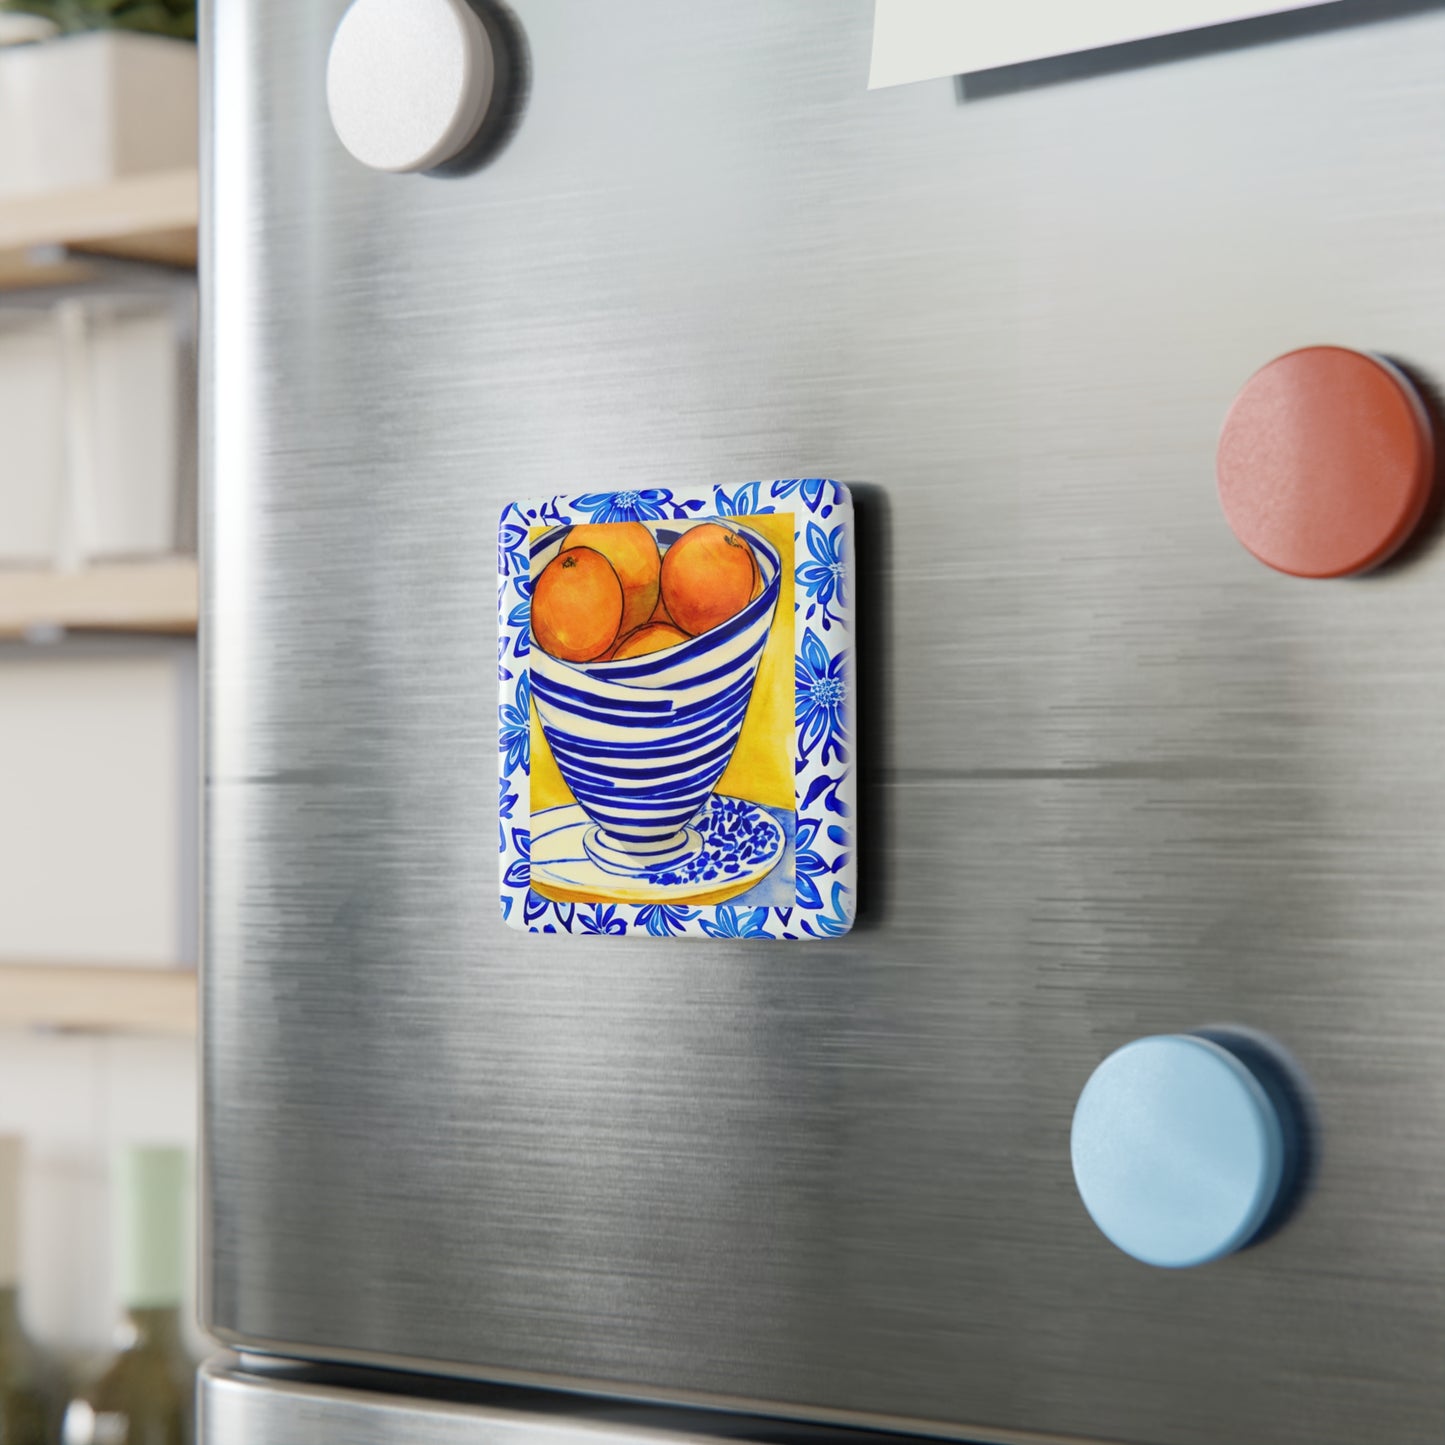 Summer Italian Oranges Watercolor Blue and White Bowl Decorative Refrigerator Porcelain Magnet, Square